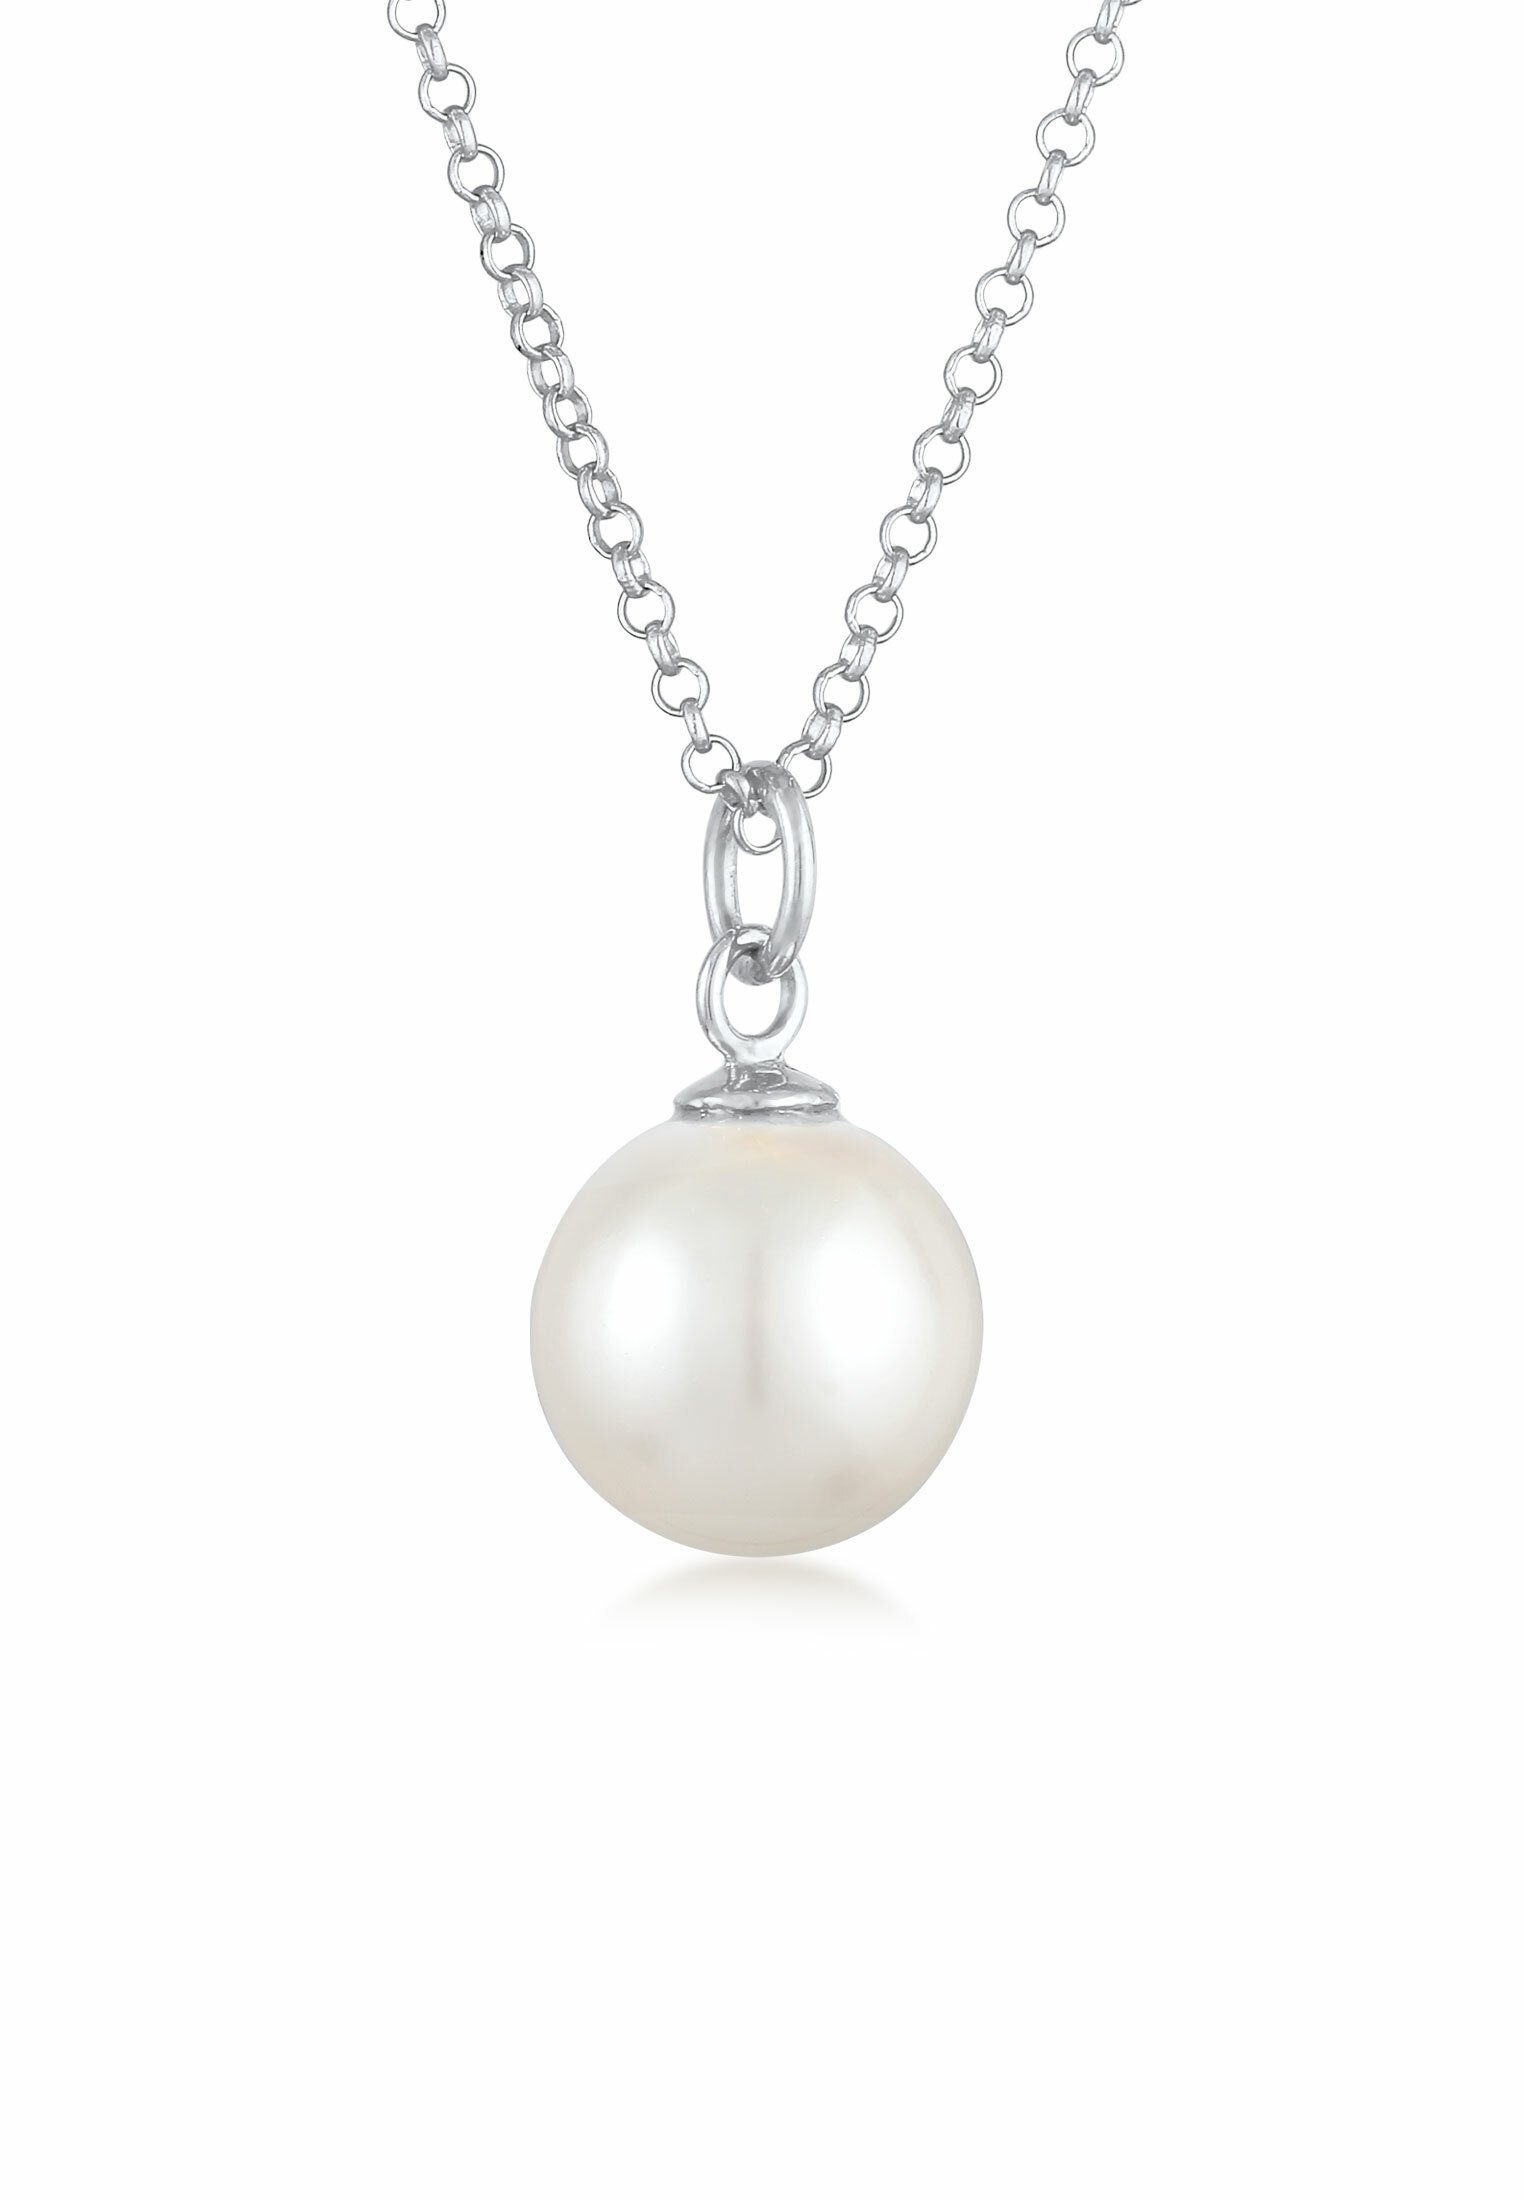 Nenalina Perlenkette Perlen Anhänger Rund Klassik 925 Silber